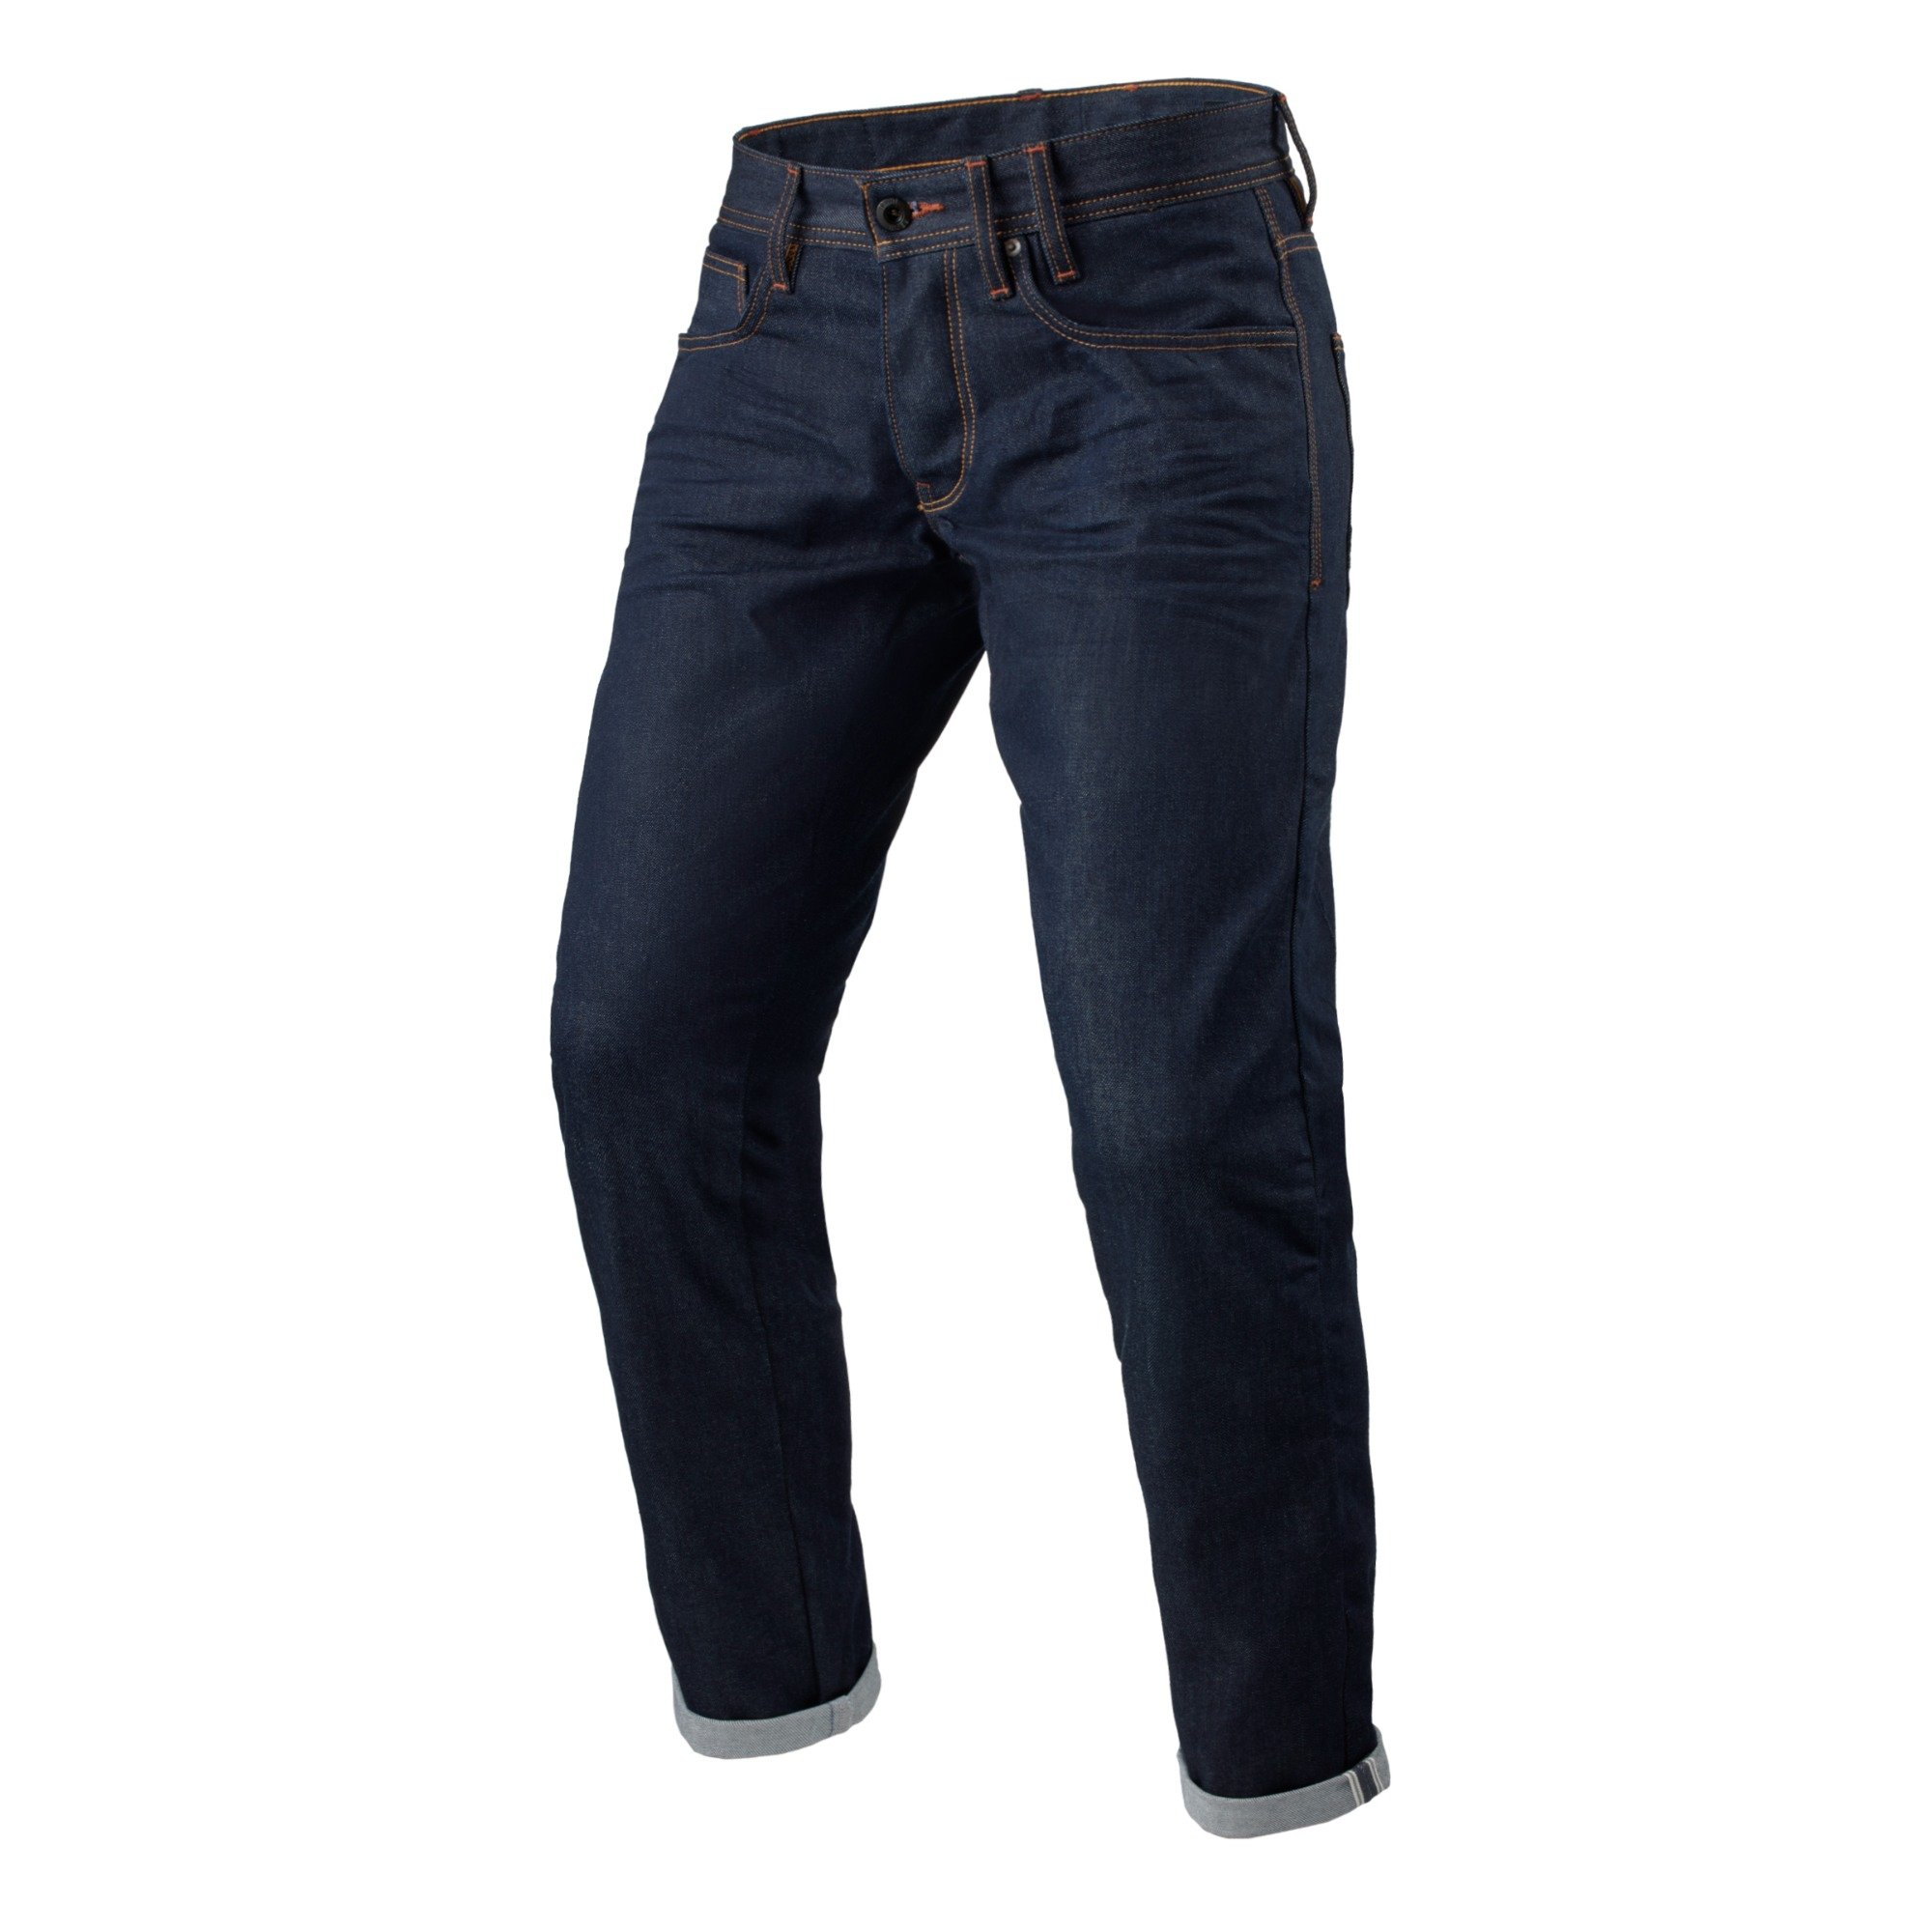 Image of REV'IT! Jeans Lewis Selvedge TF Dark Blue L34 Motorcycle Pants Size L34/W36 EN